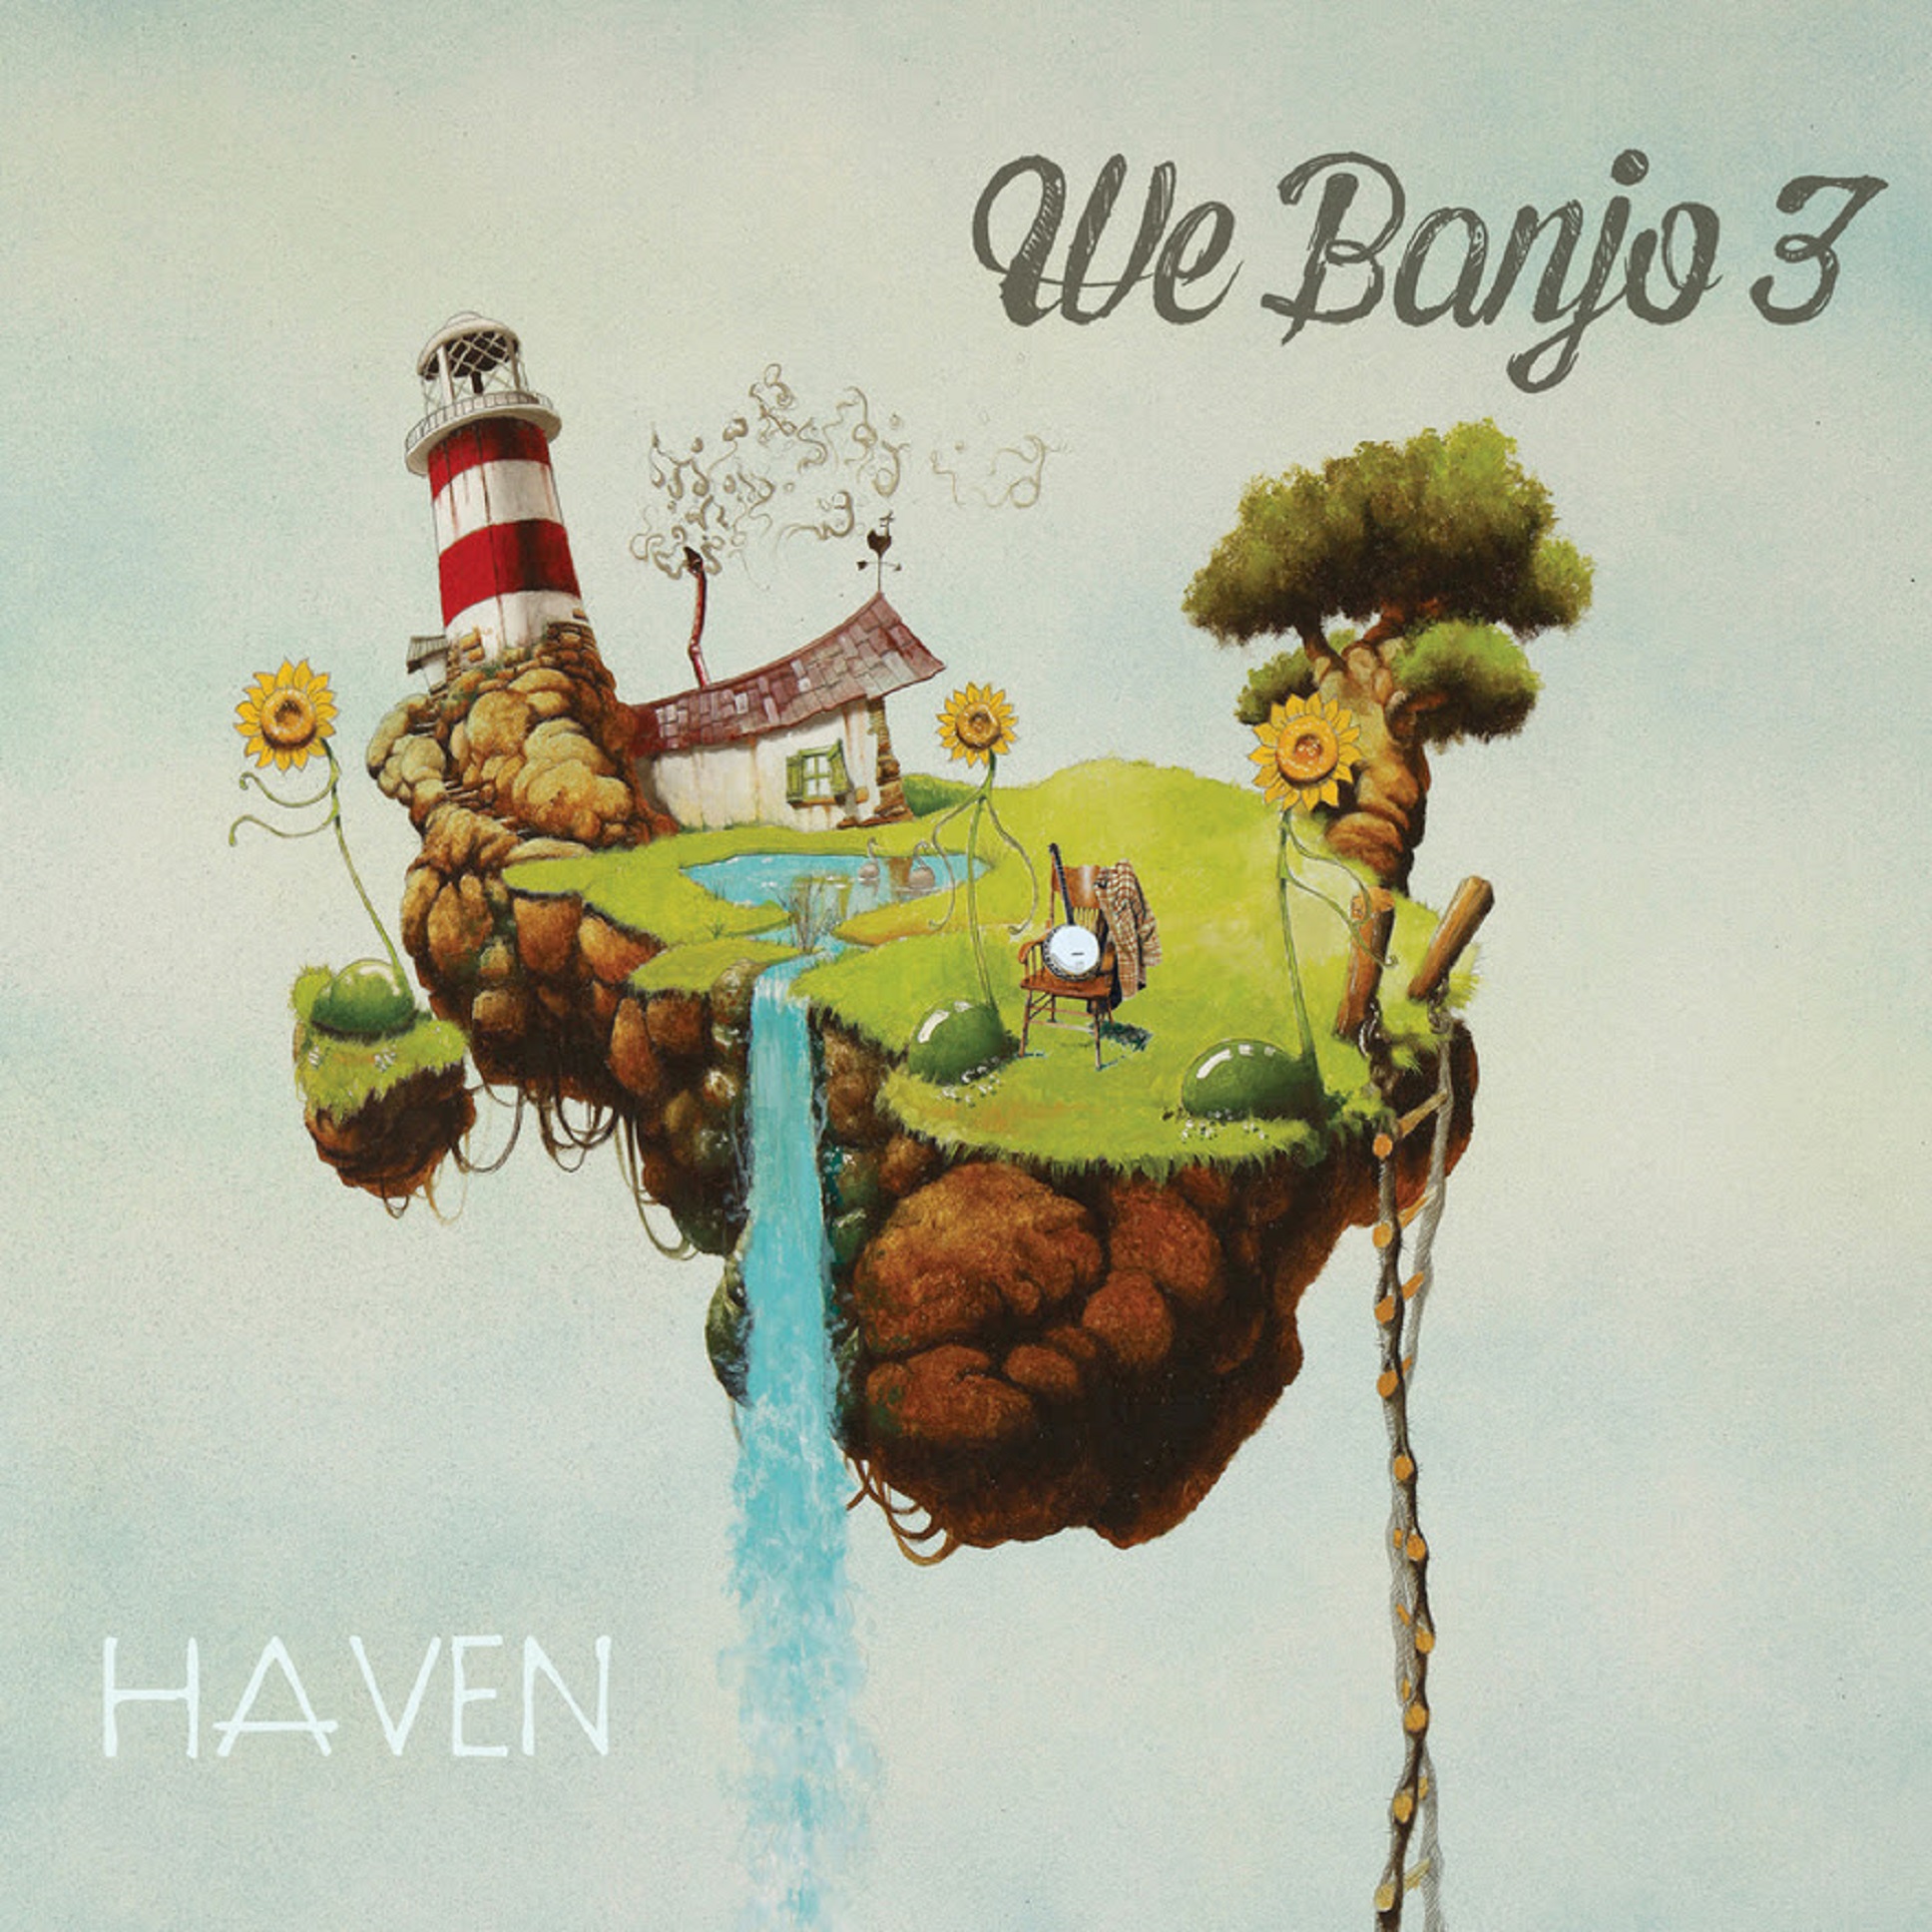 WE BANJO 3 announces release of HAVEN on 7/27 Grateful Web